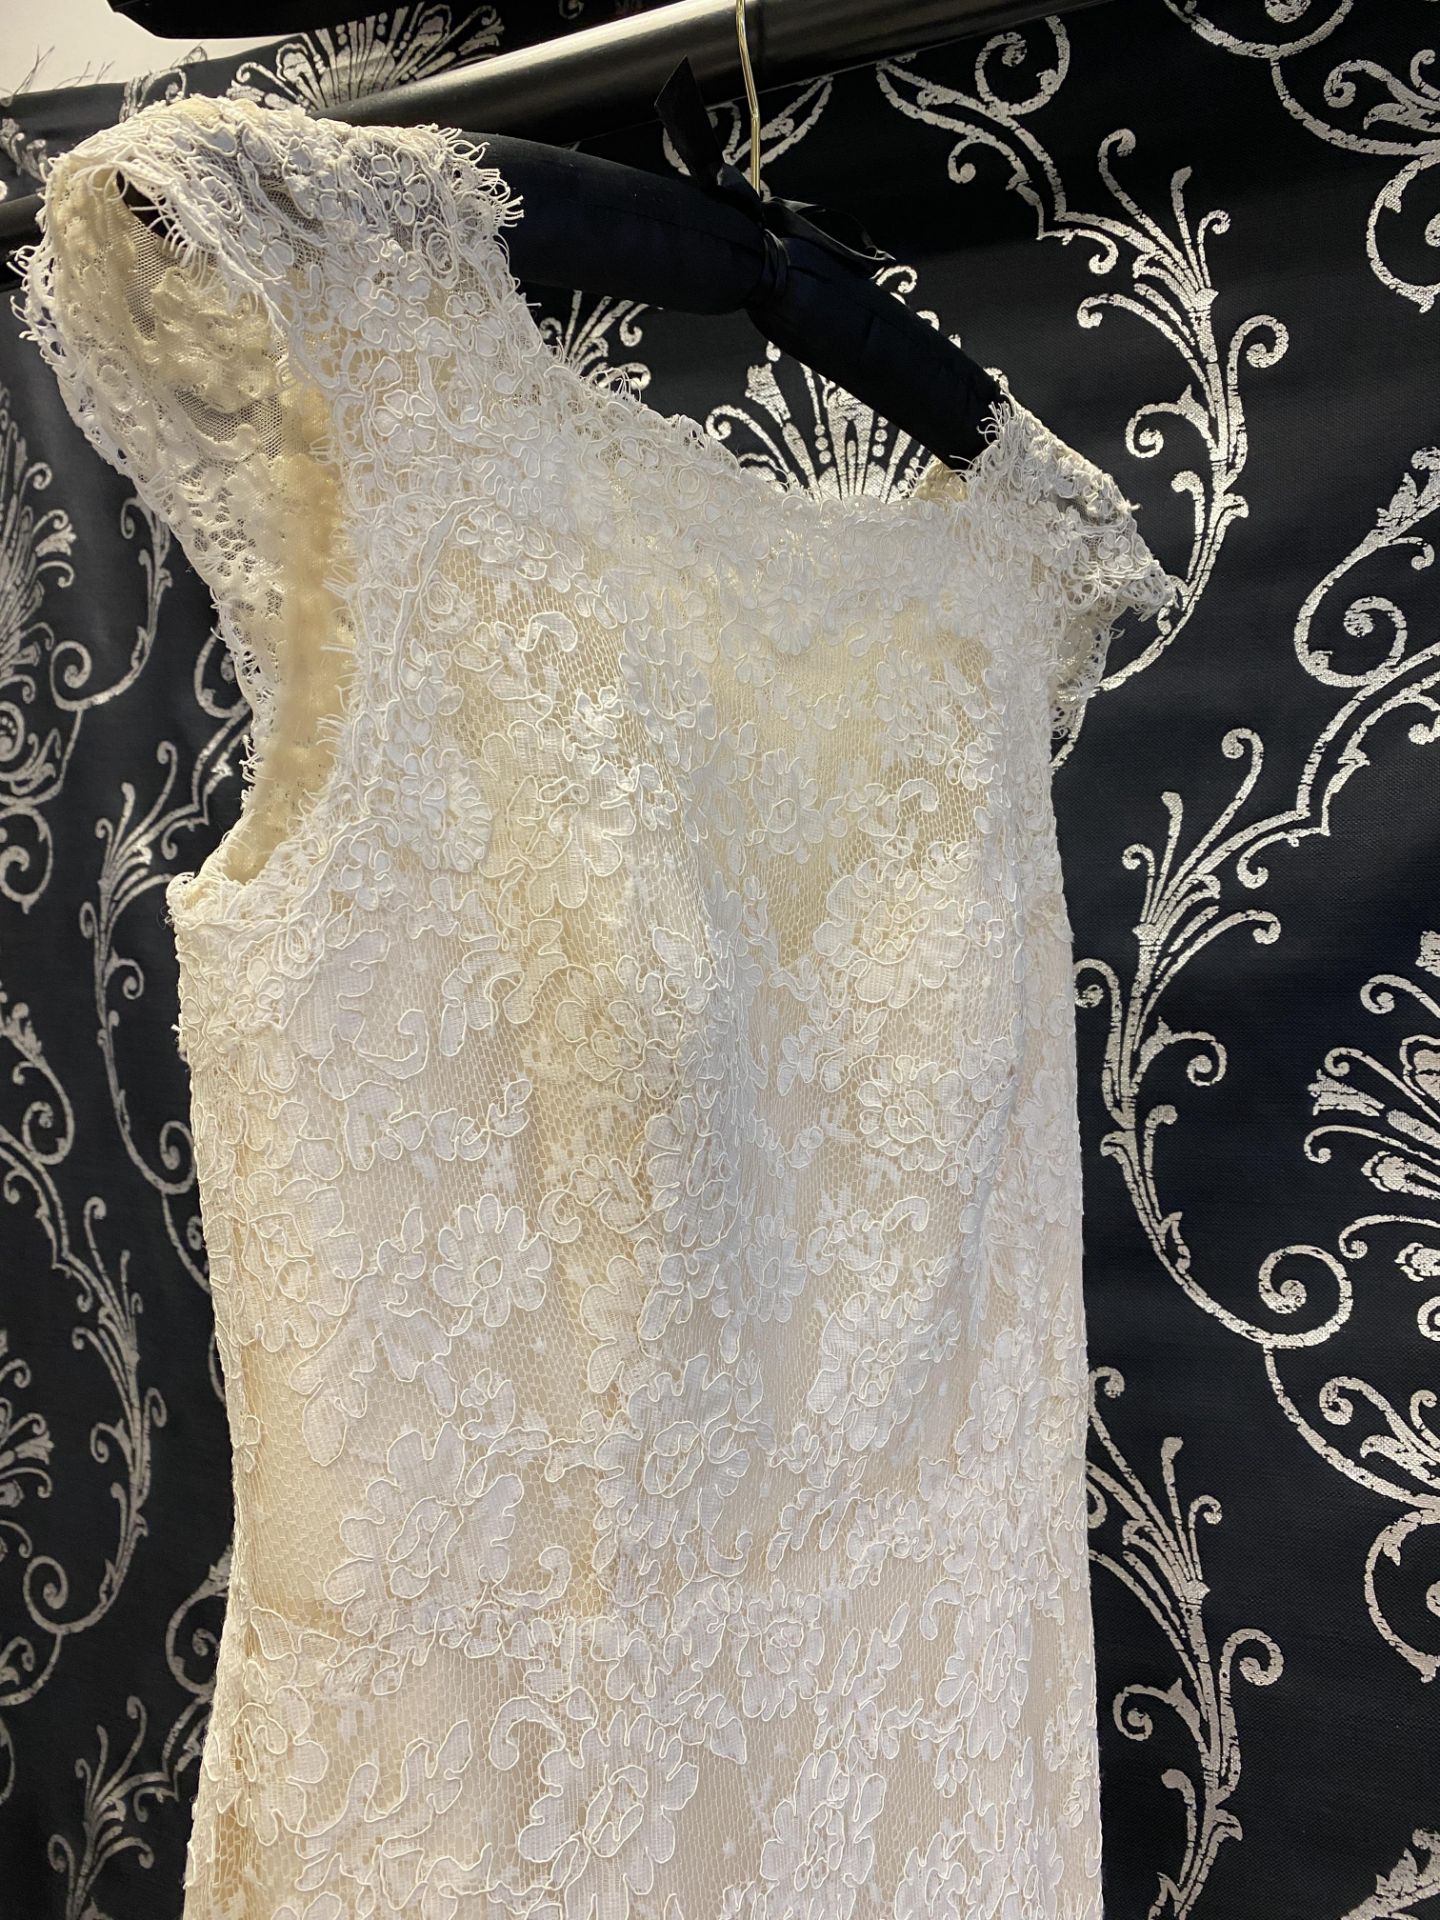 1 x ANNA SUL Y 'White Rose' Full Lace Mermaid Style Designer Wedding Dress RRP £1,250 - Image 4 of 11